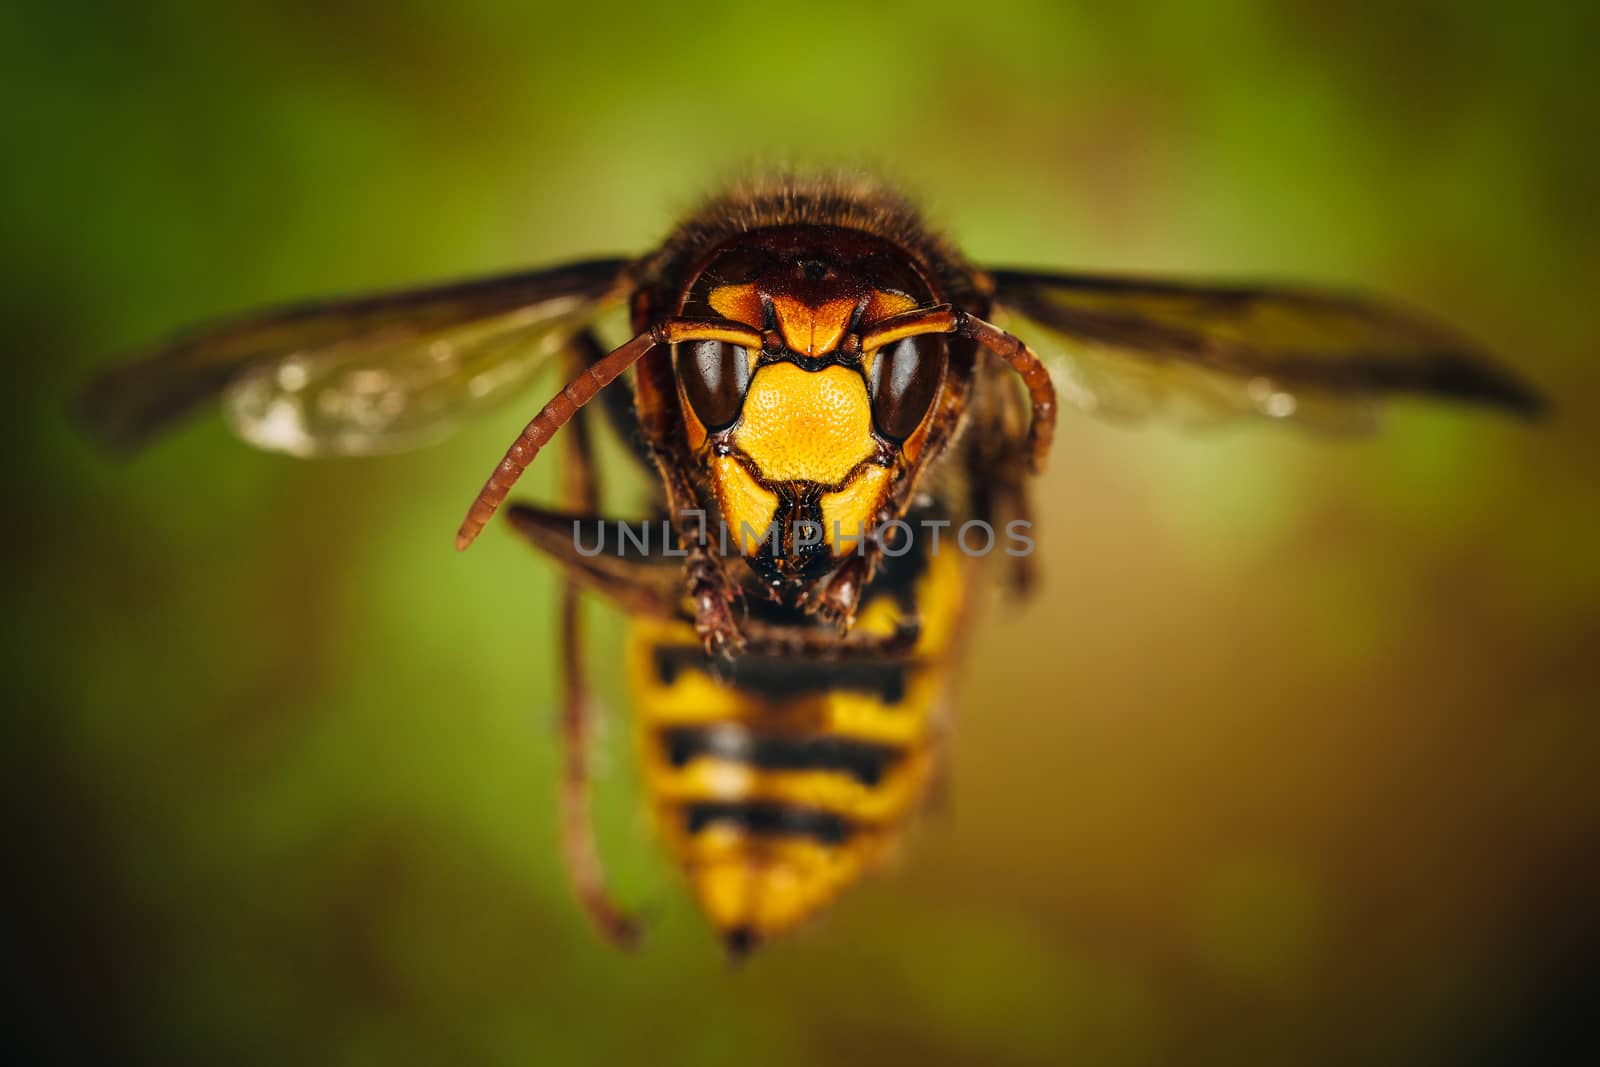 Close up of a hornet's head.